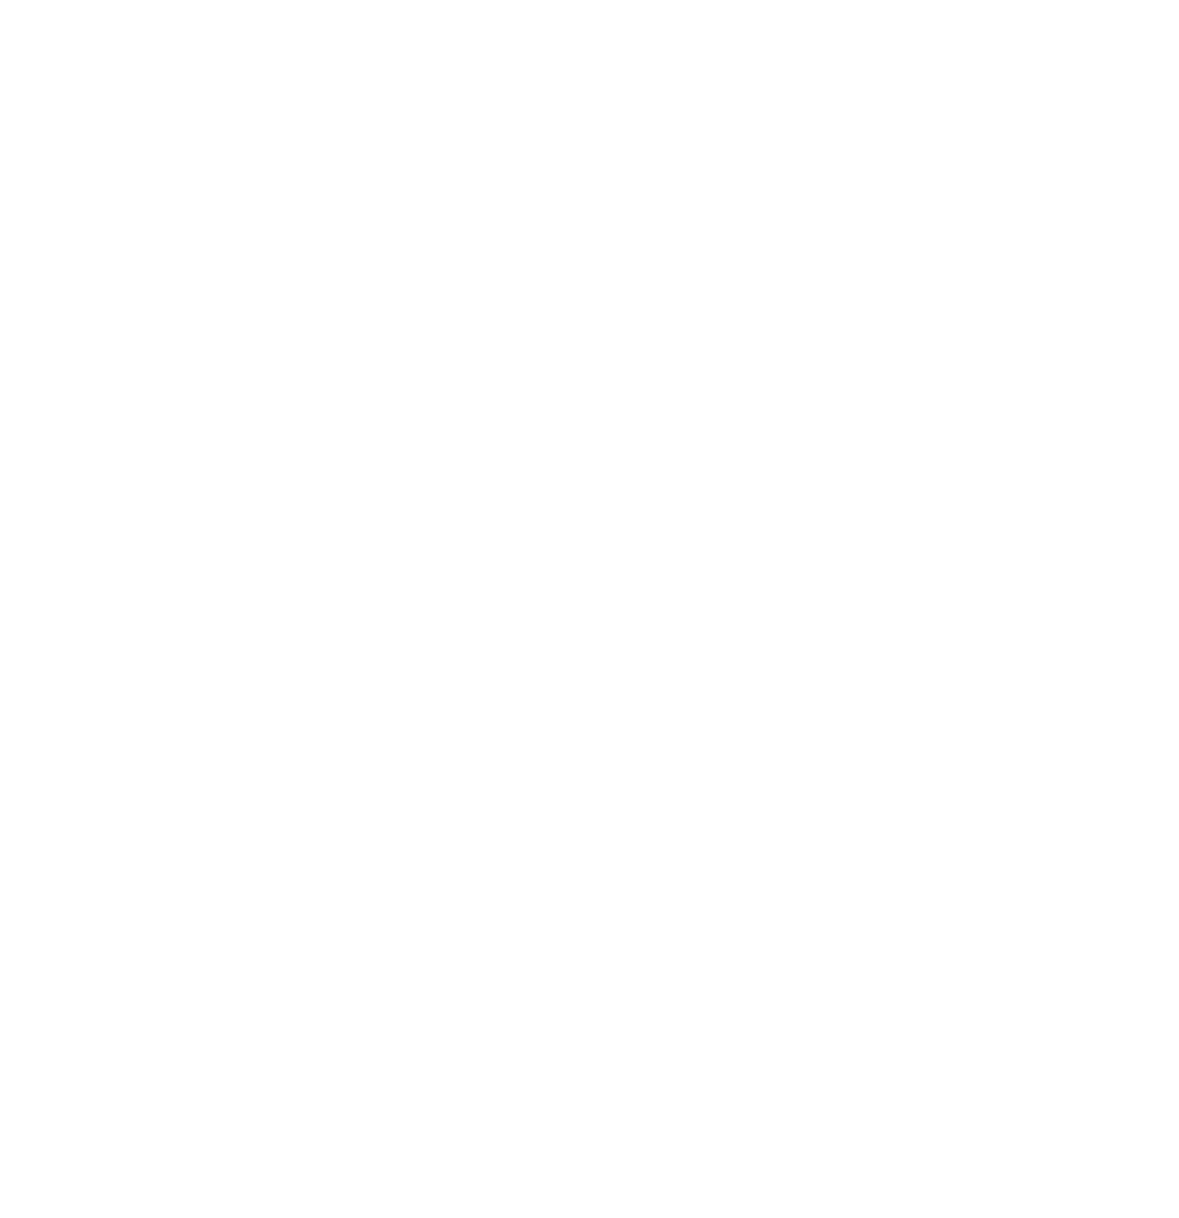 TimeSheets24